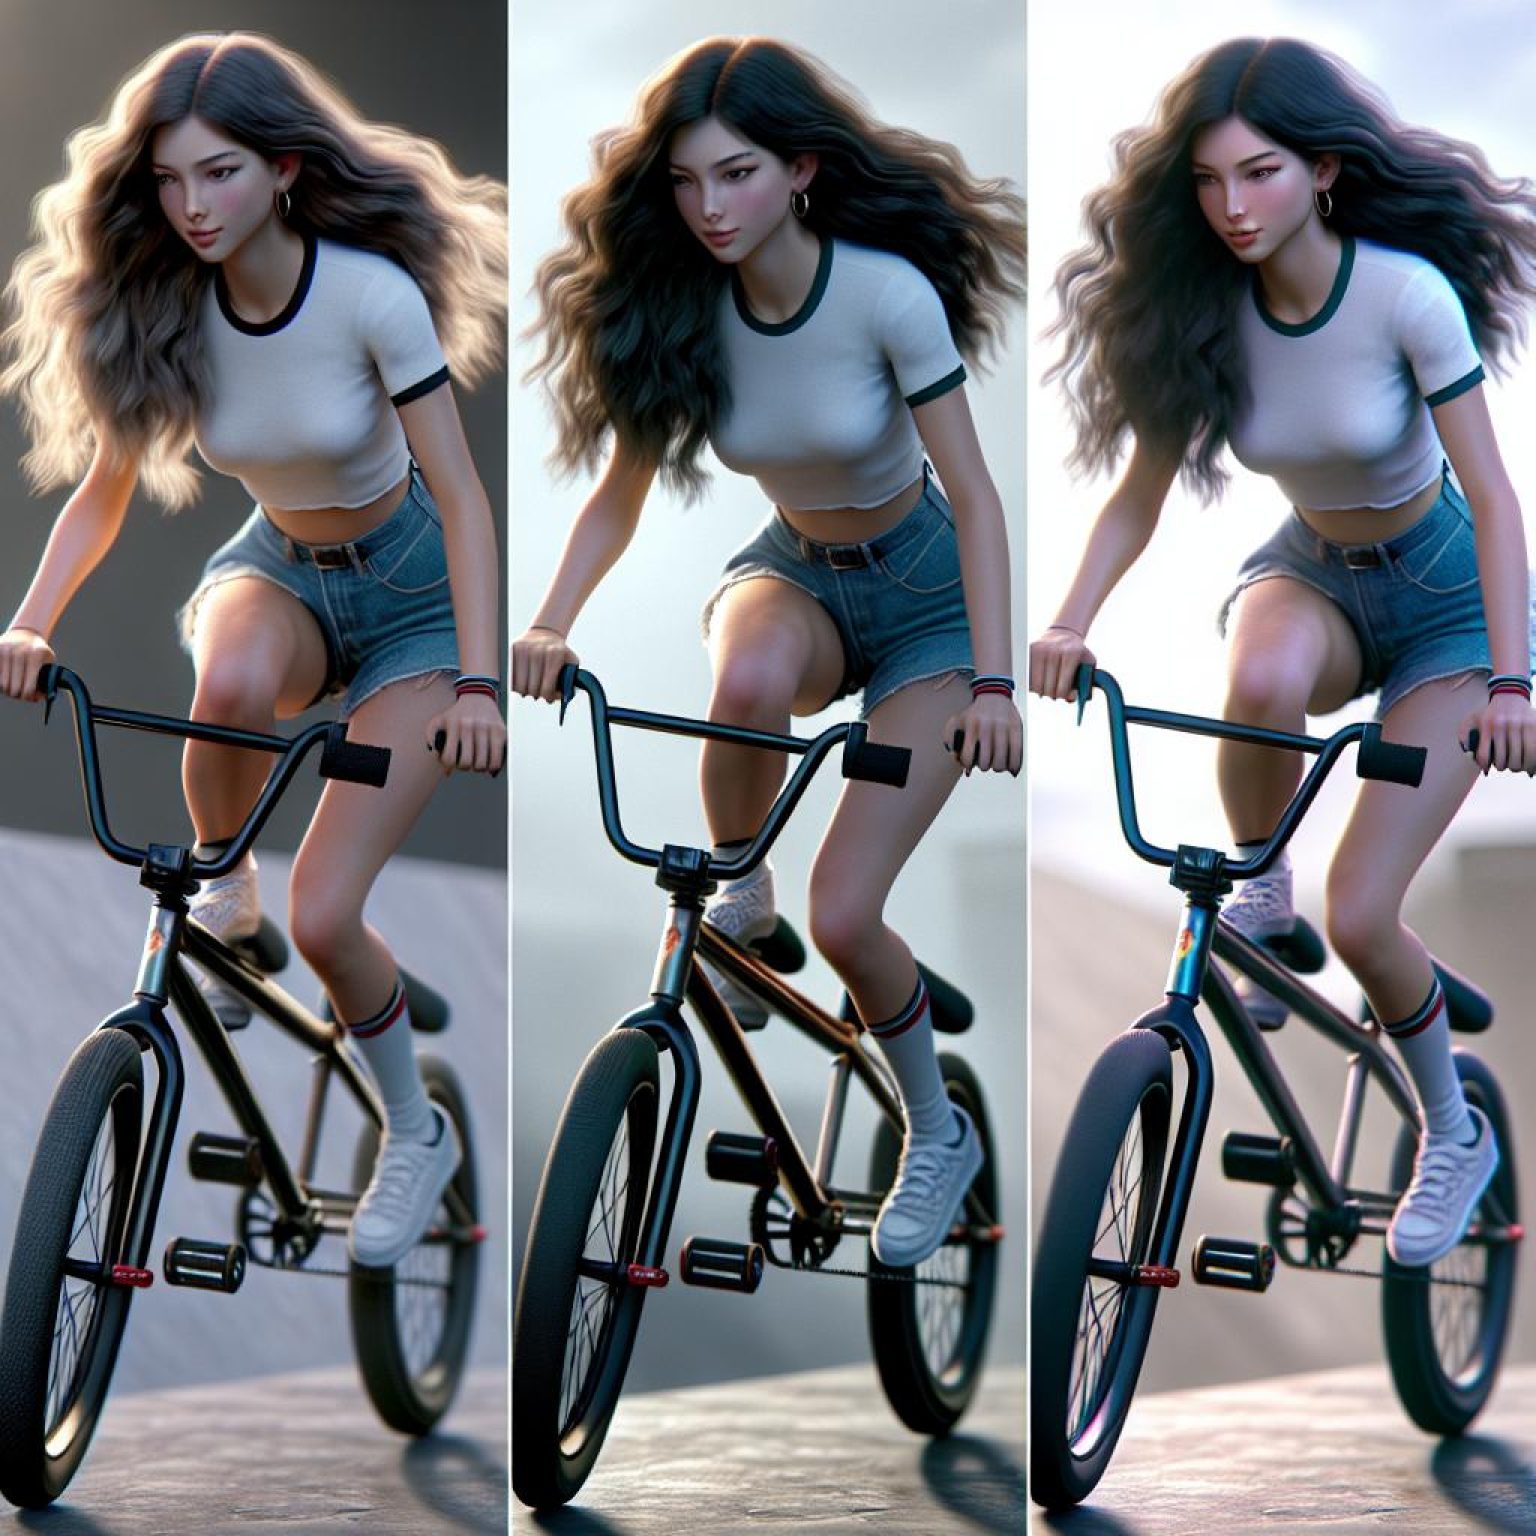 "Girl on BMX bike"